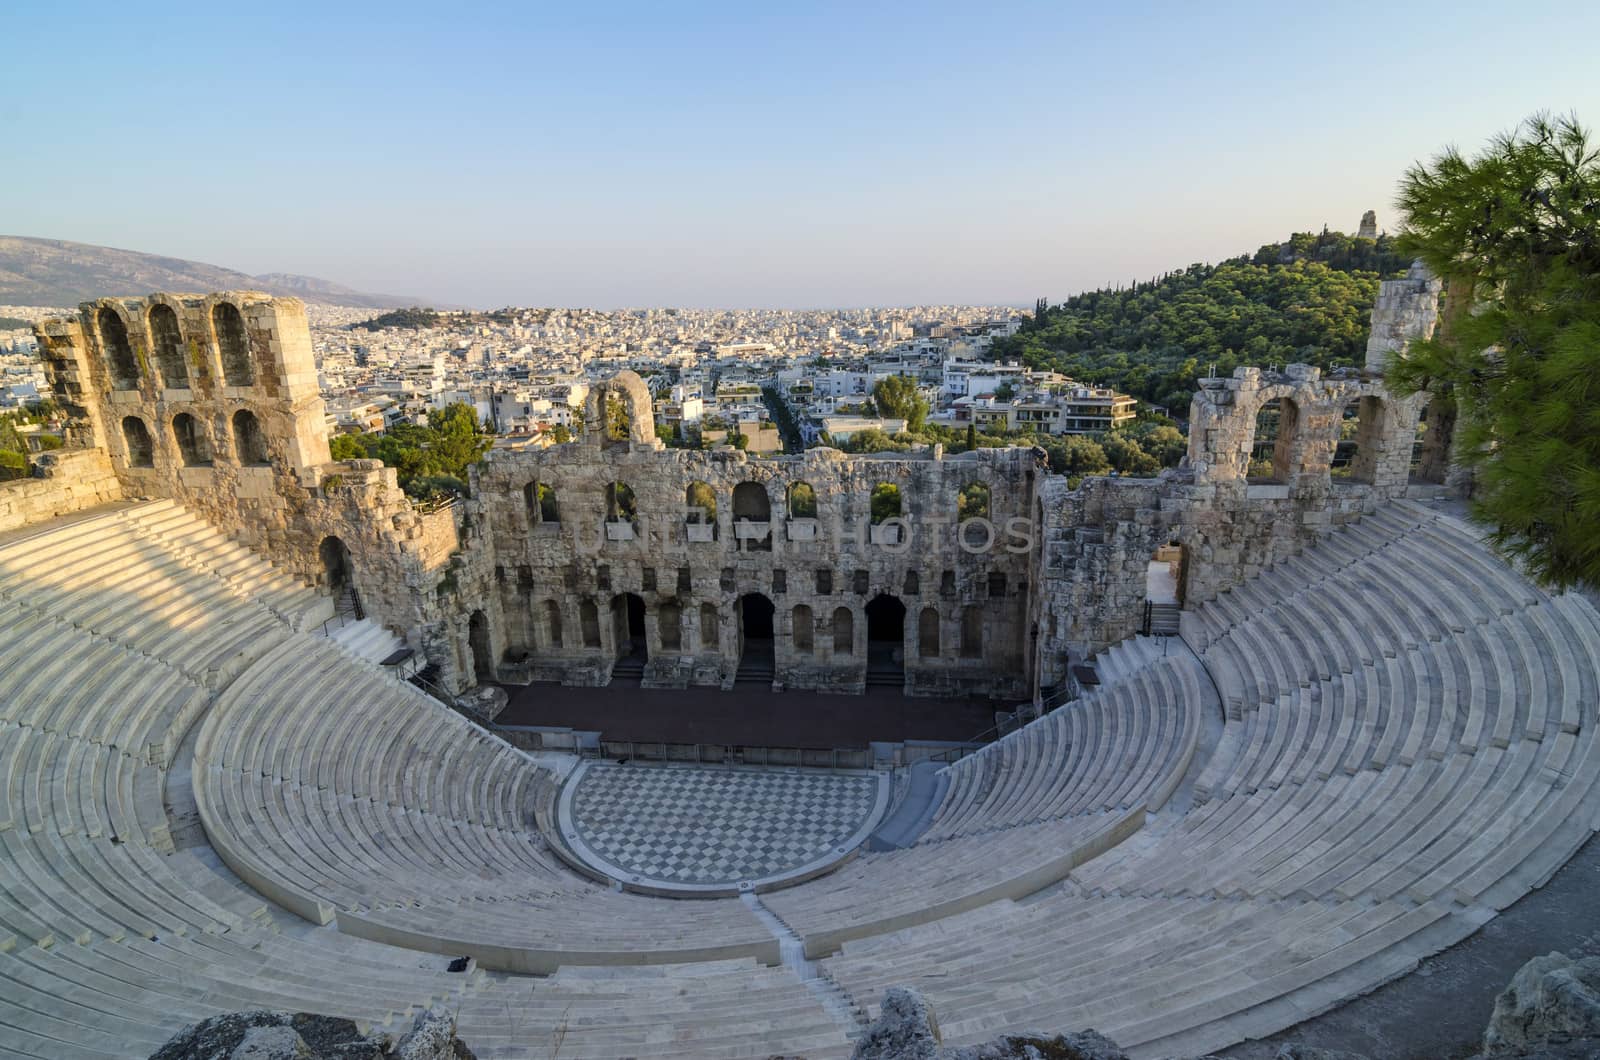 Athenian theatre by Anzemulec